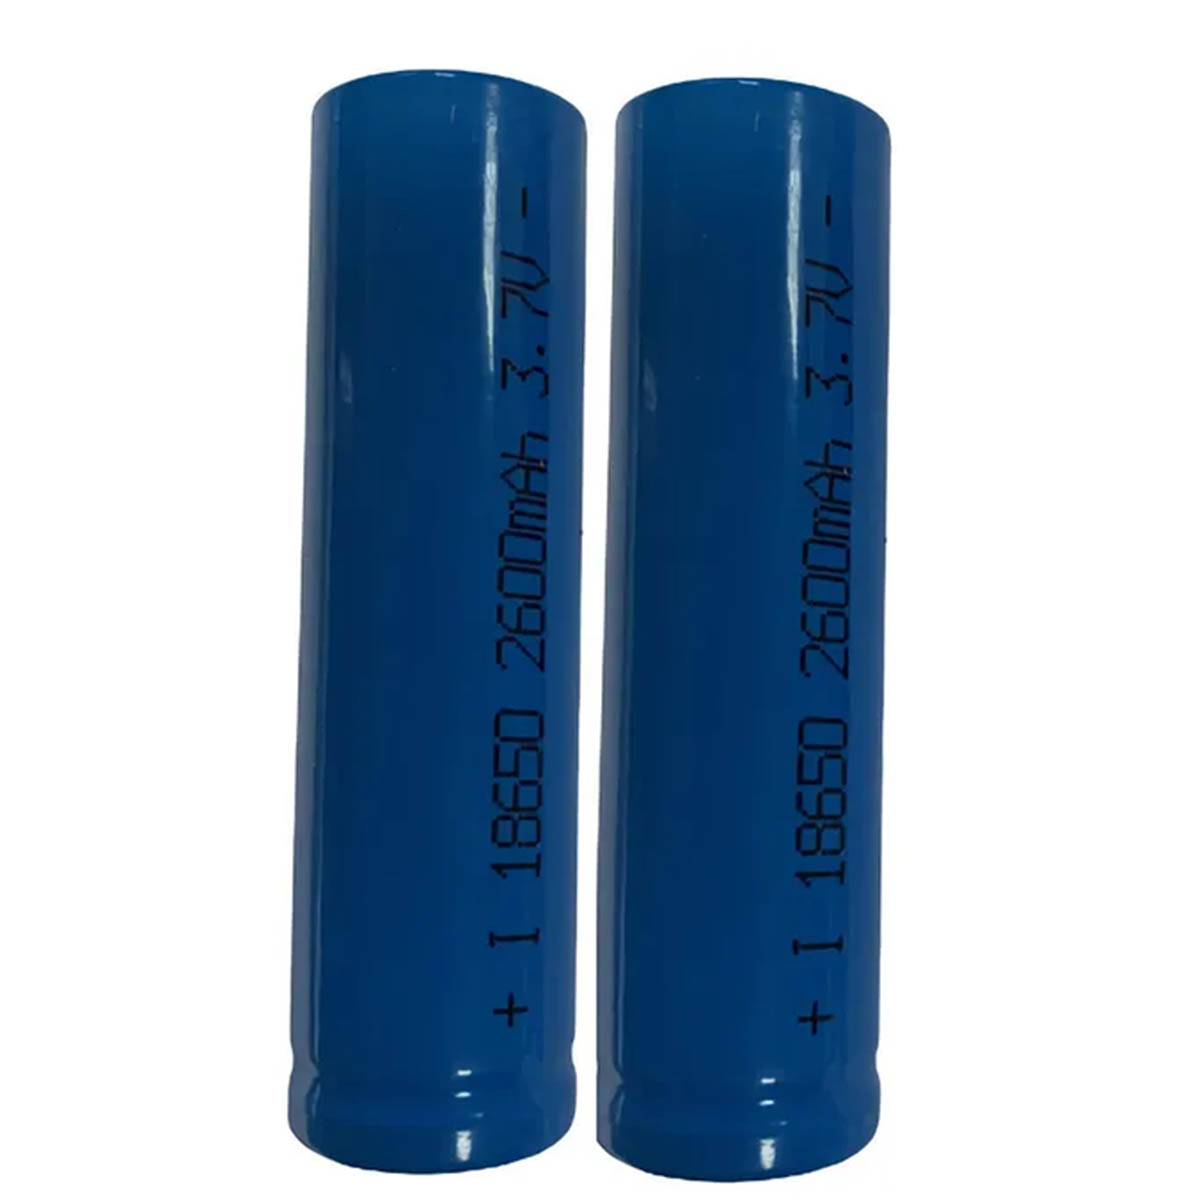 АКБ (Аккумулятор) G70 18650 LTP-07, 2600 mAh, цвет синий